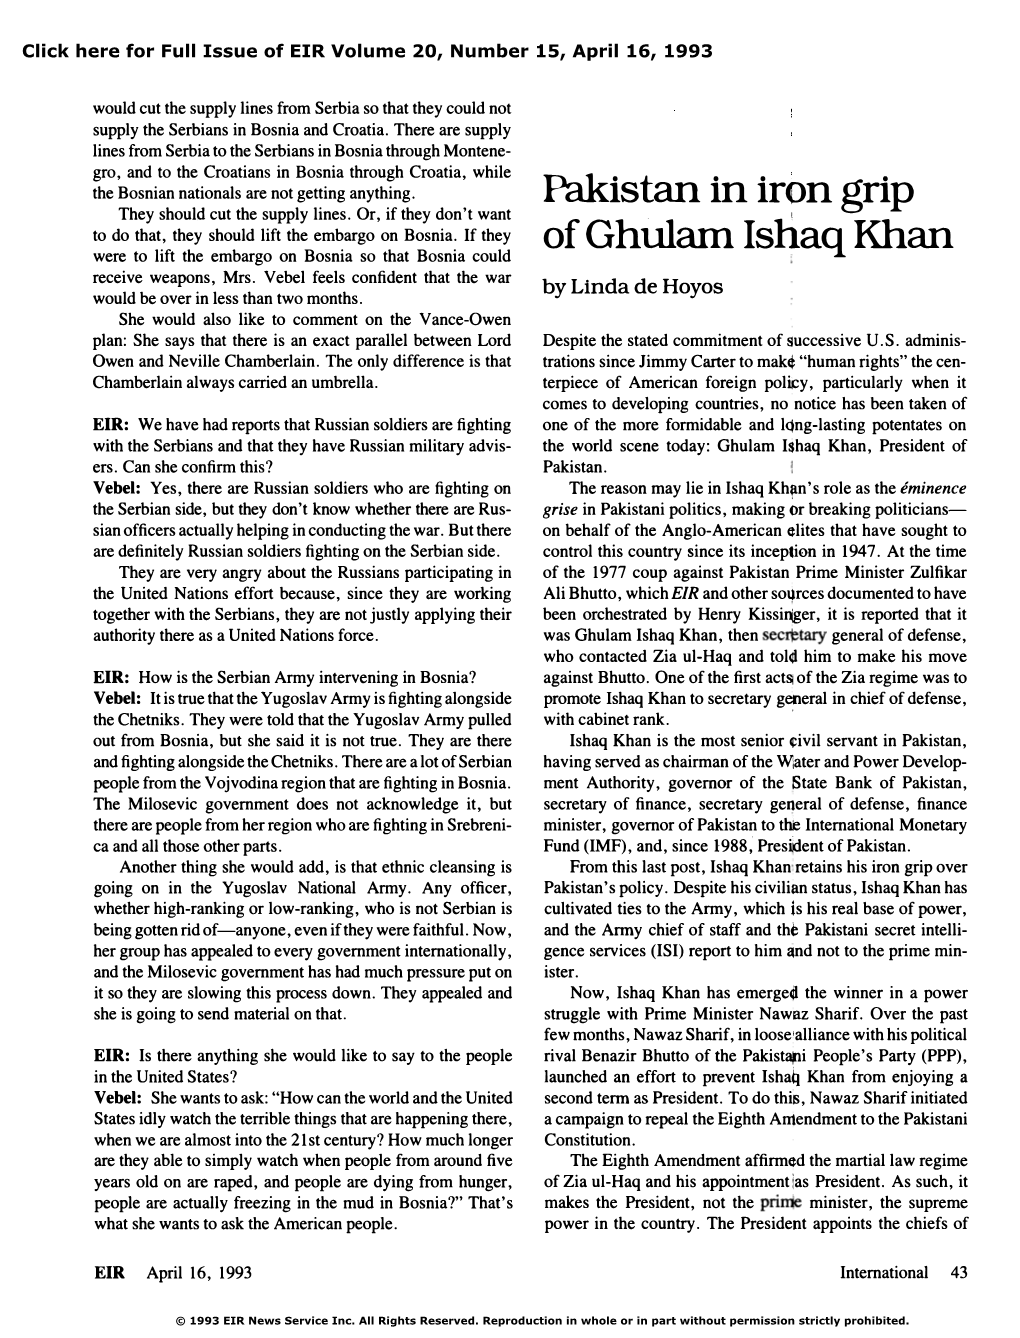 Pakistan in Iron Grip of Ghulam Ishaq Khan